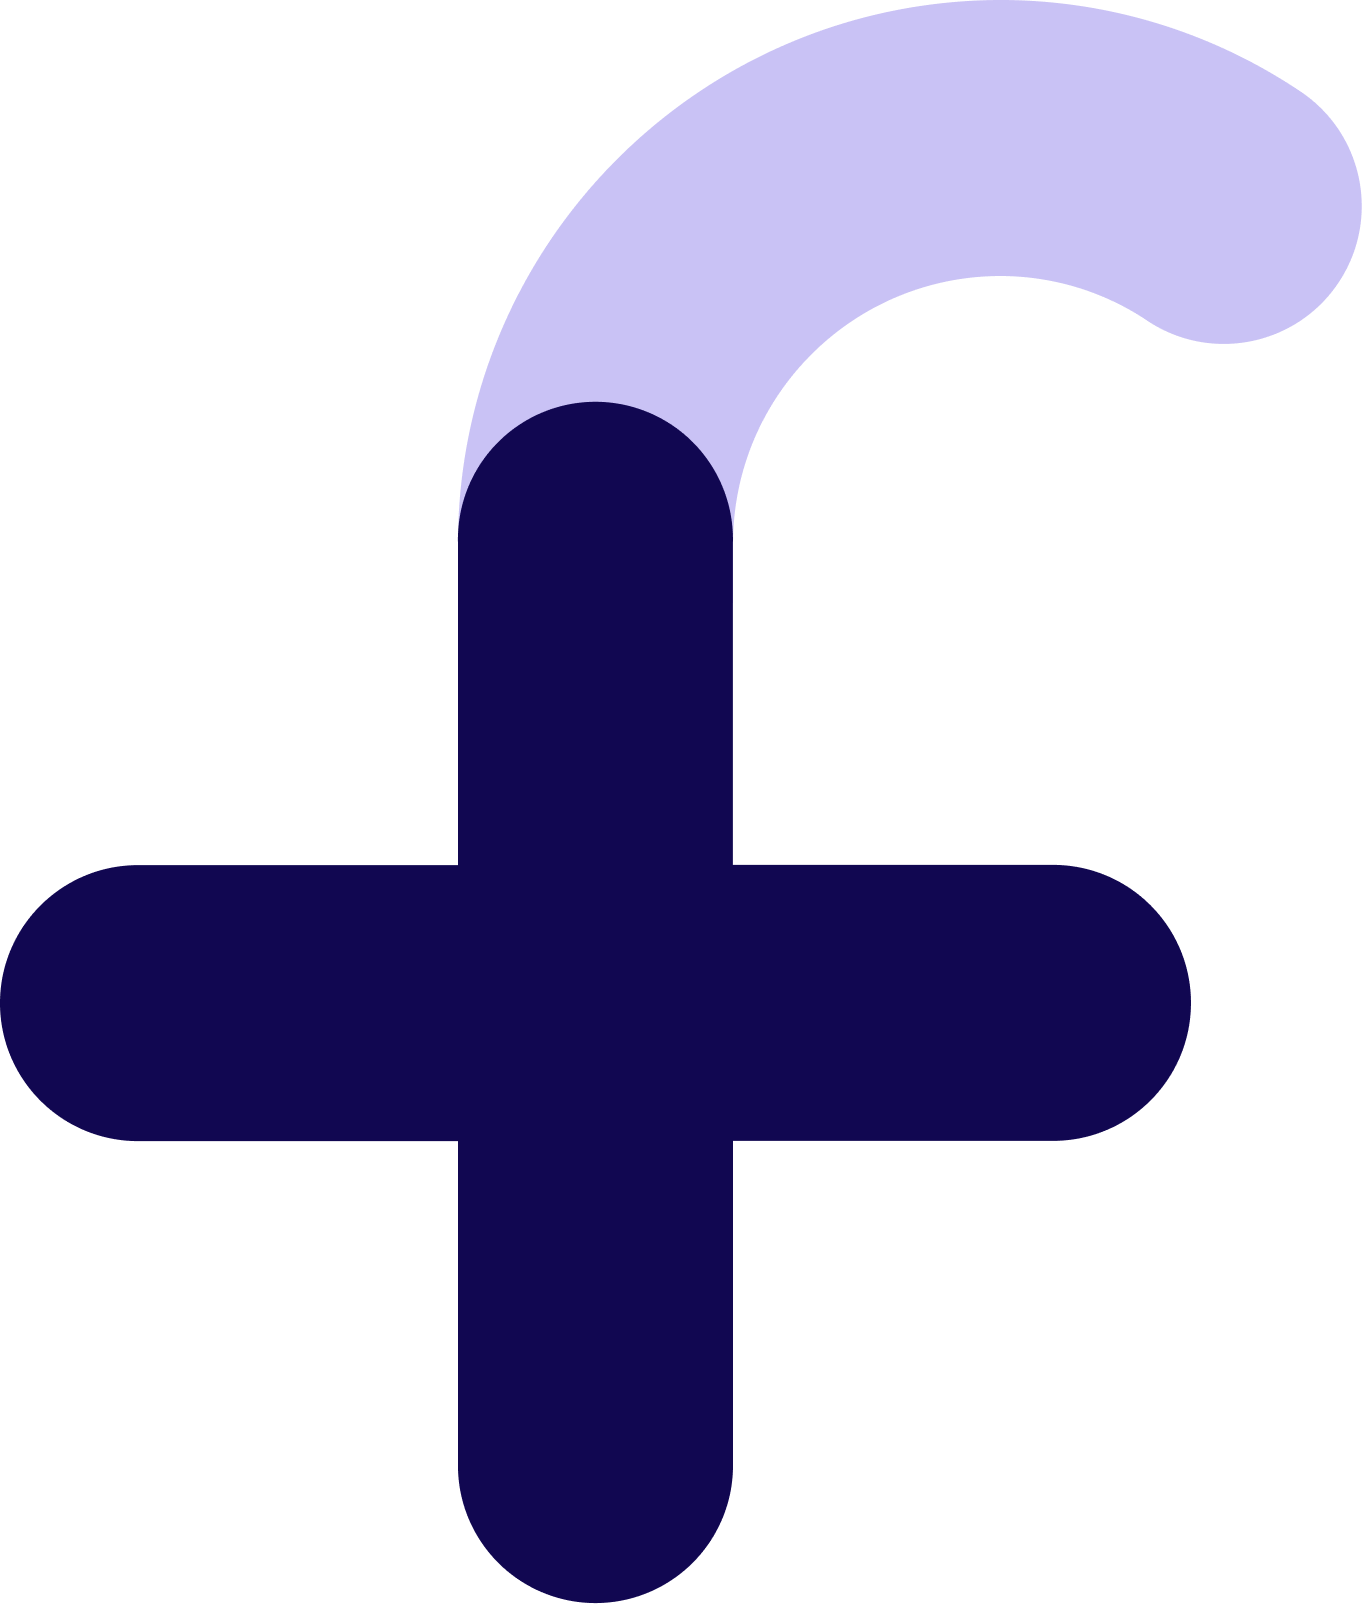 Fikens logo i form av et f